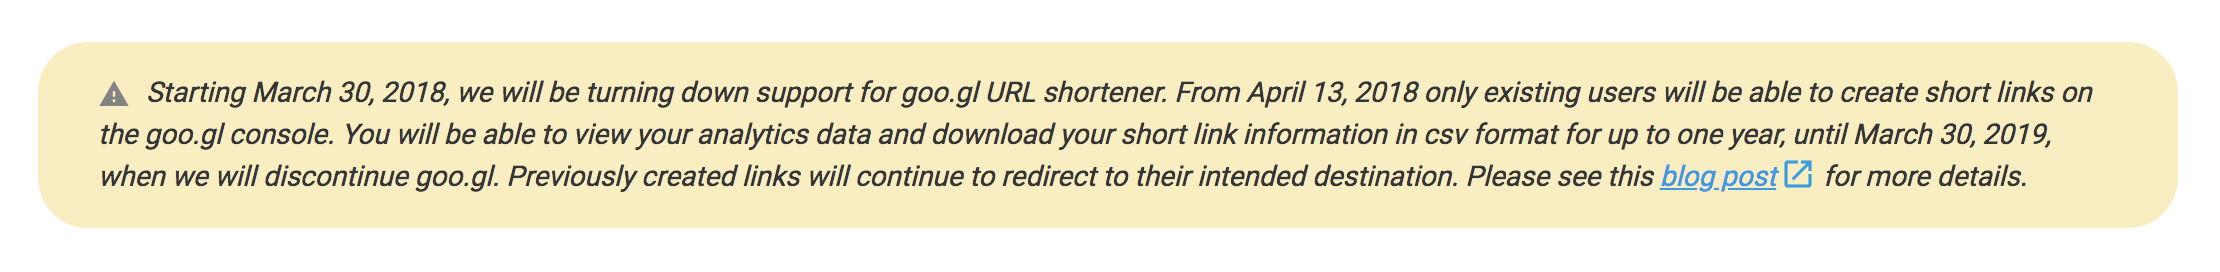 Goo.gl URL Shortener Service Notice